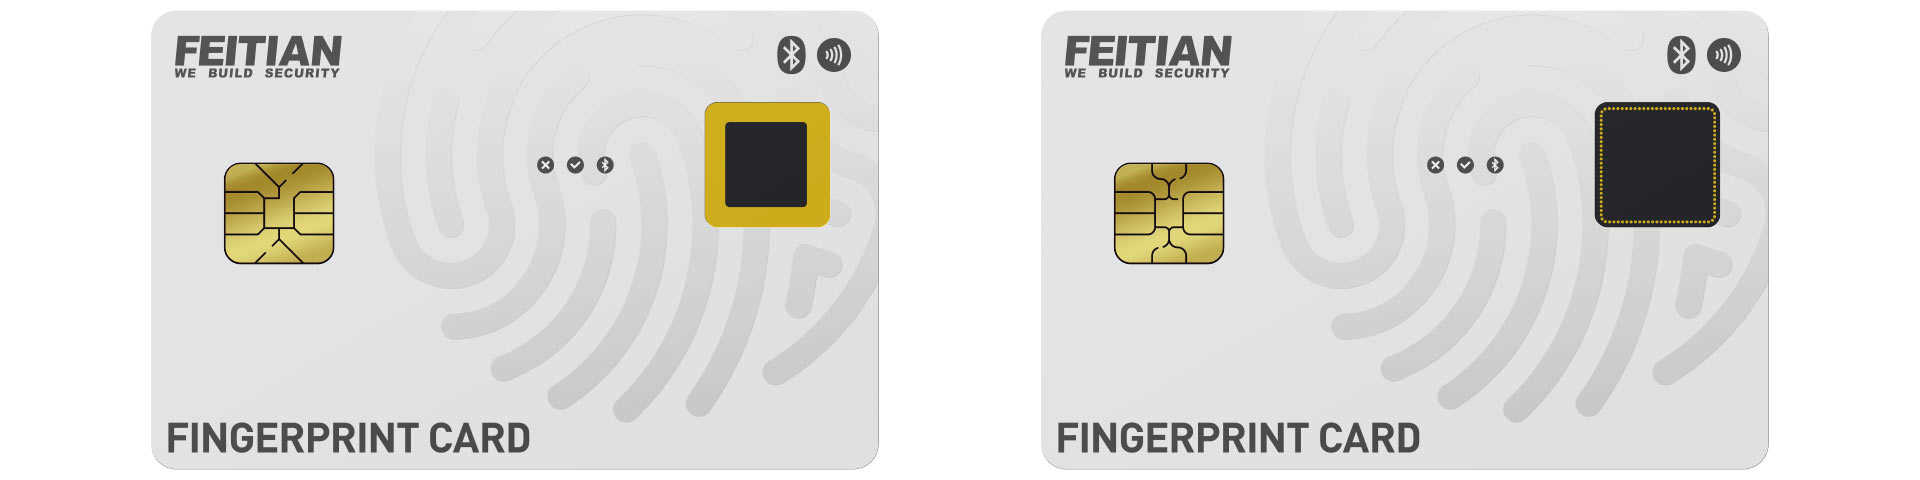 fingerprint_cards_standard